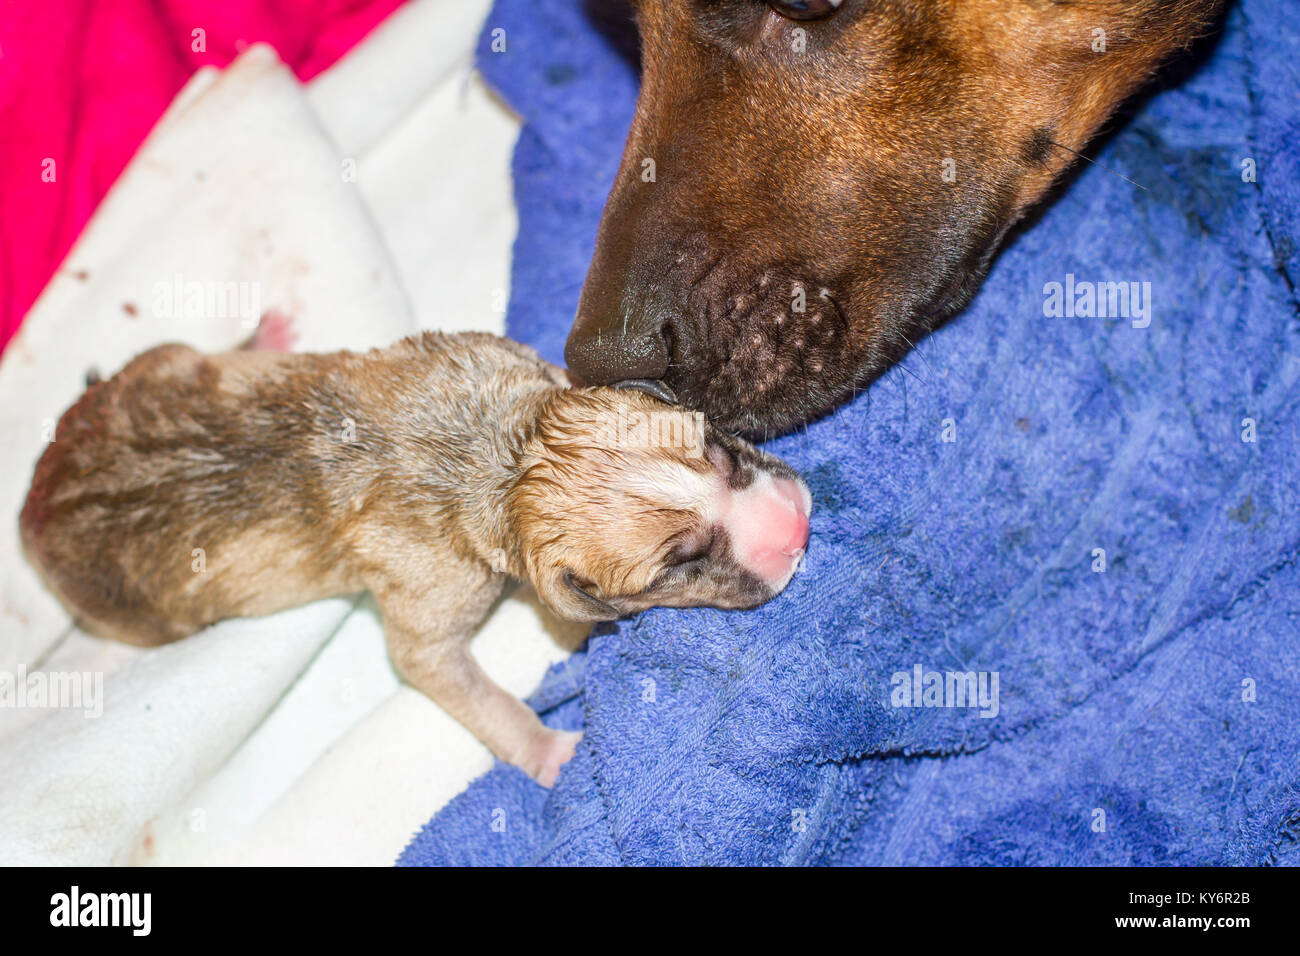 pregnant dog giving birth